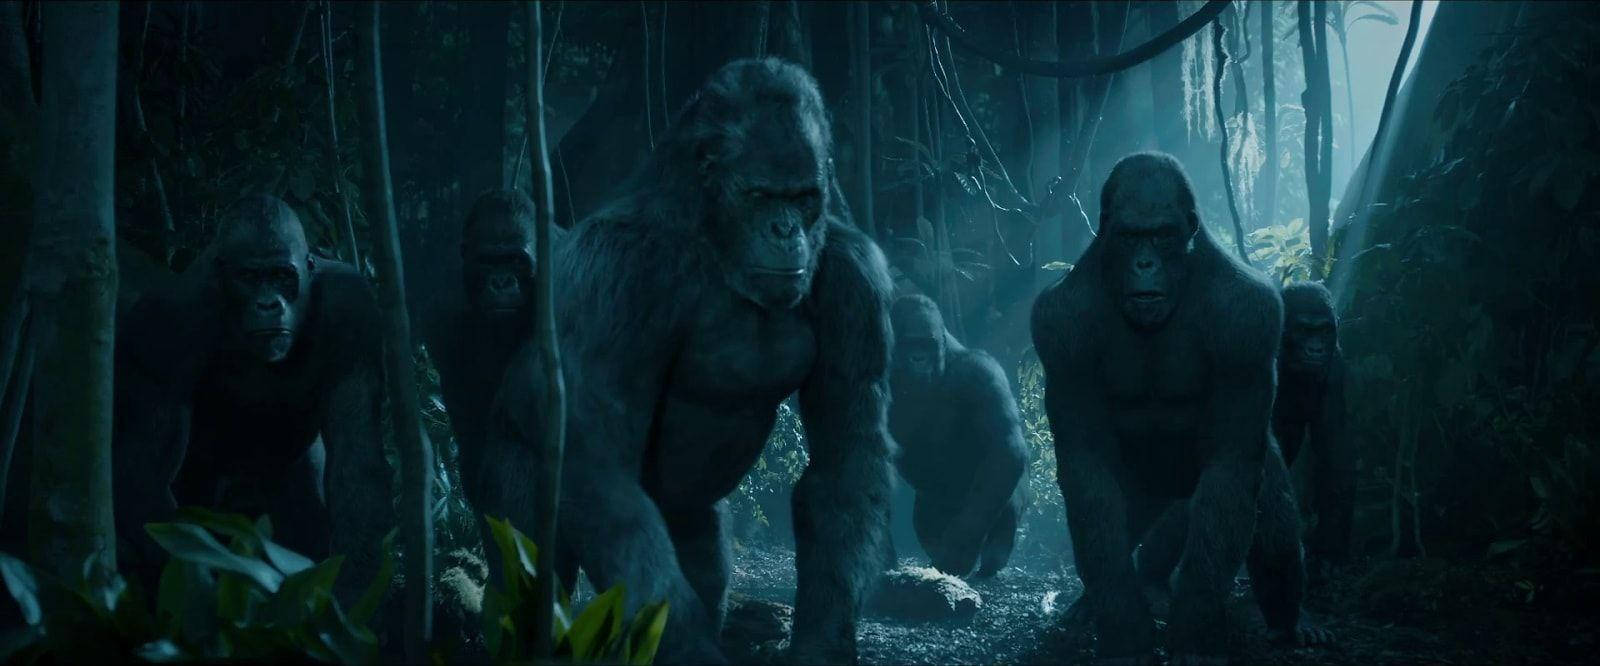 Alenda De Tarzan - Família Grande De Gorilas. Papel de Parede